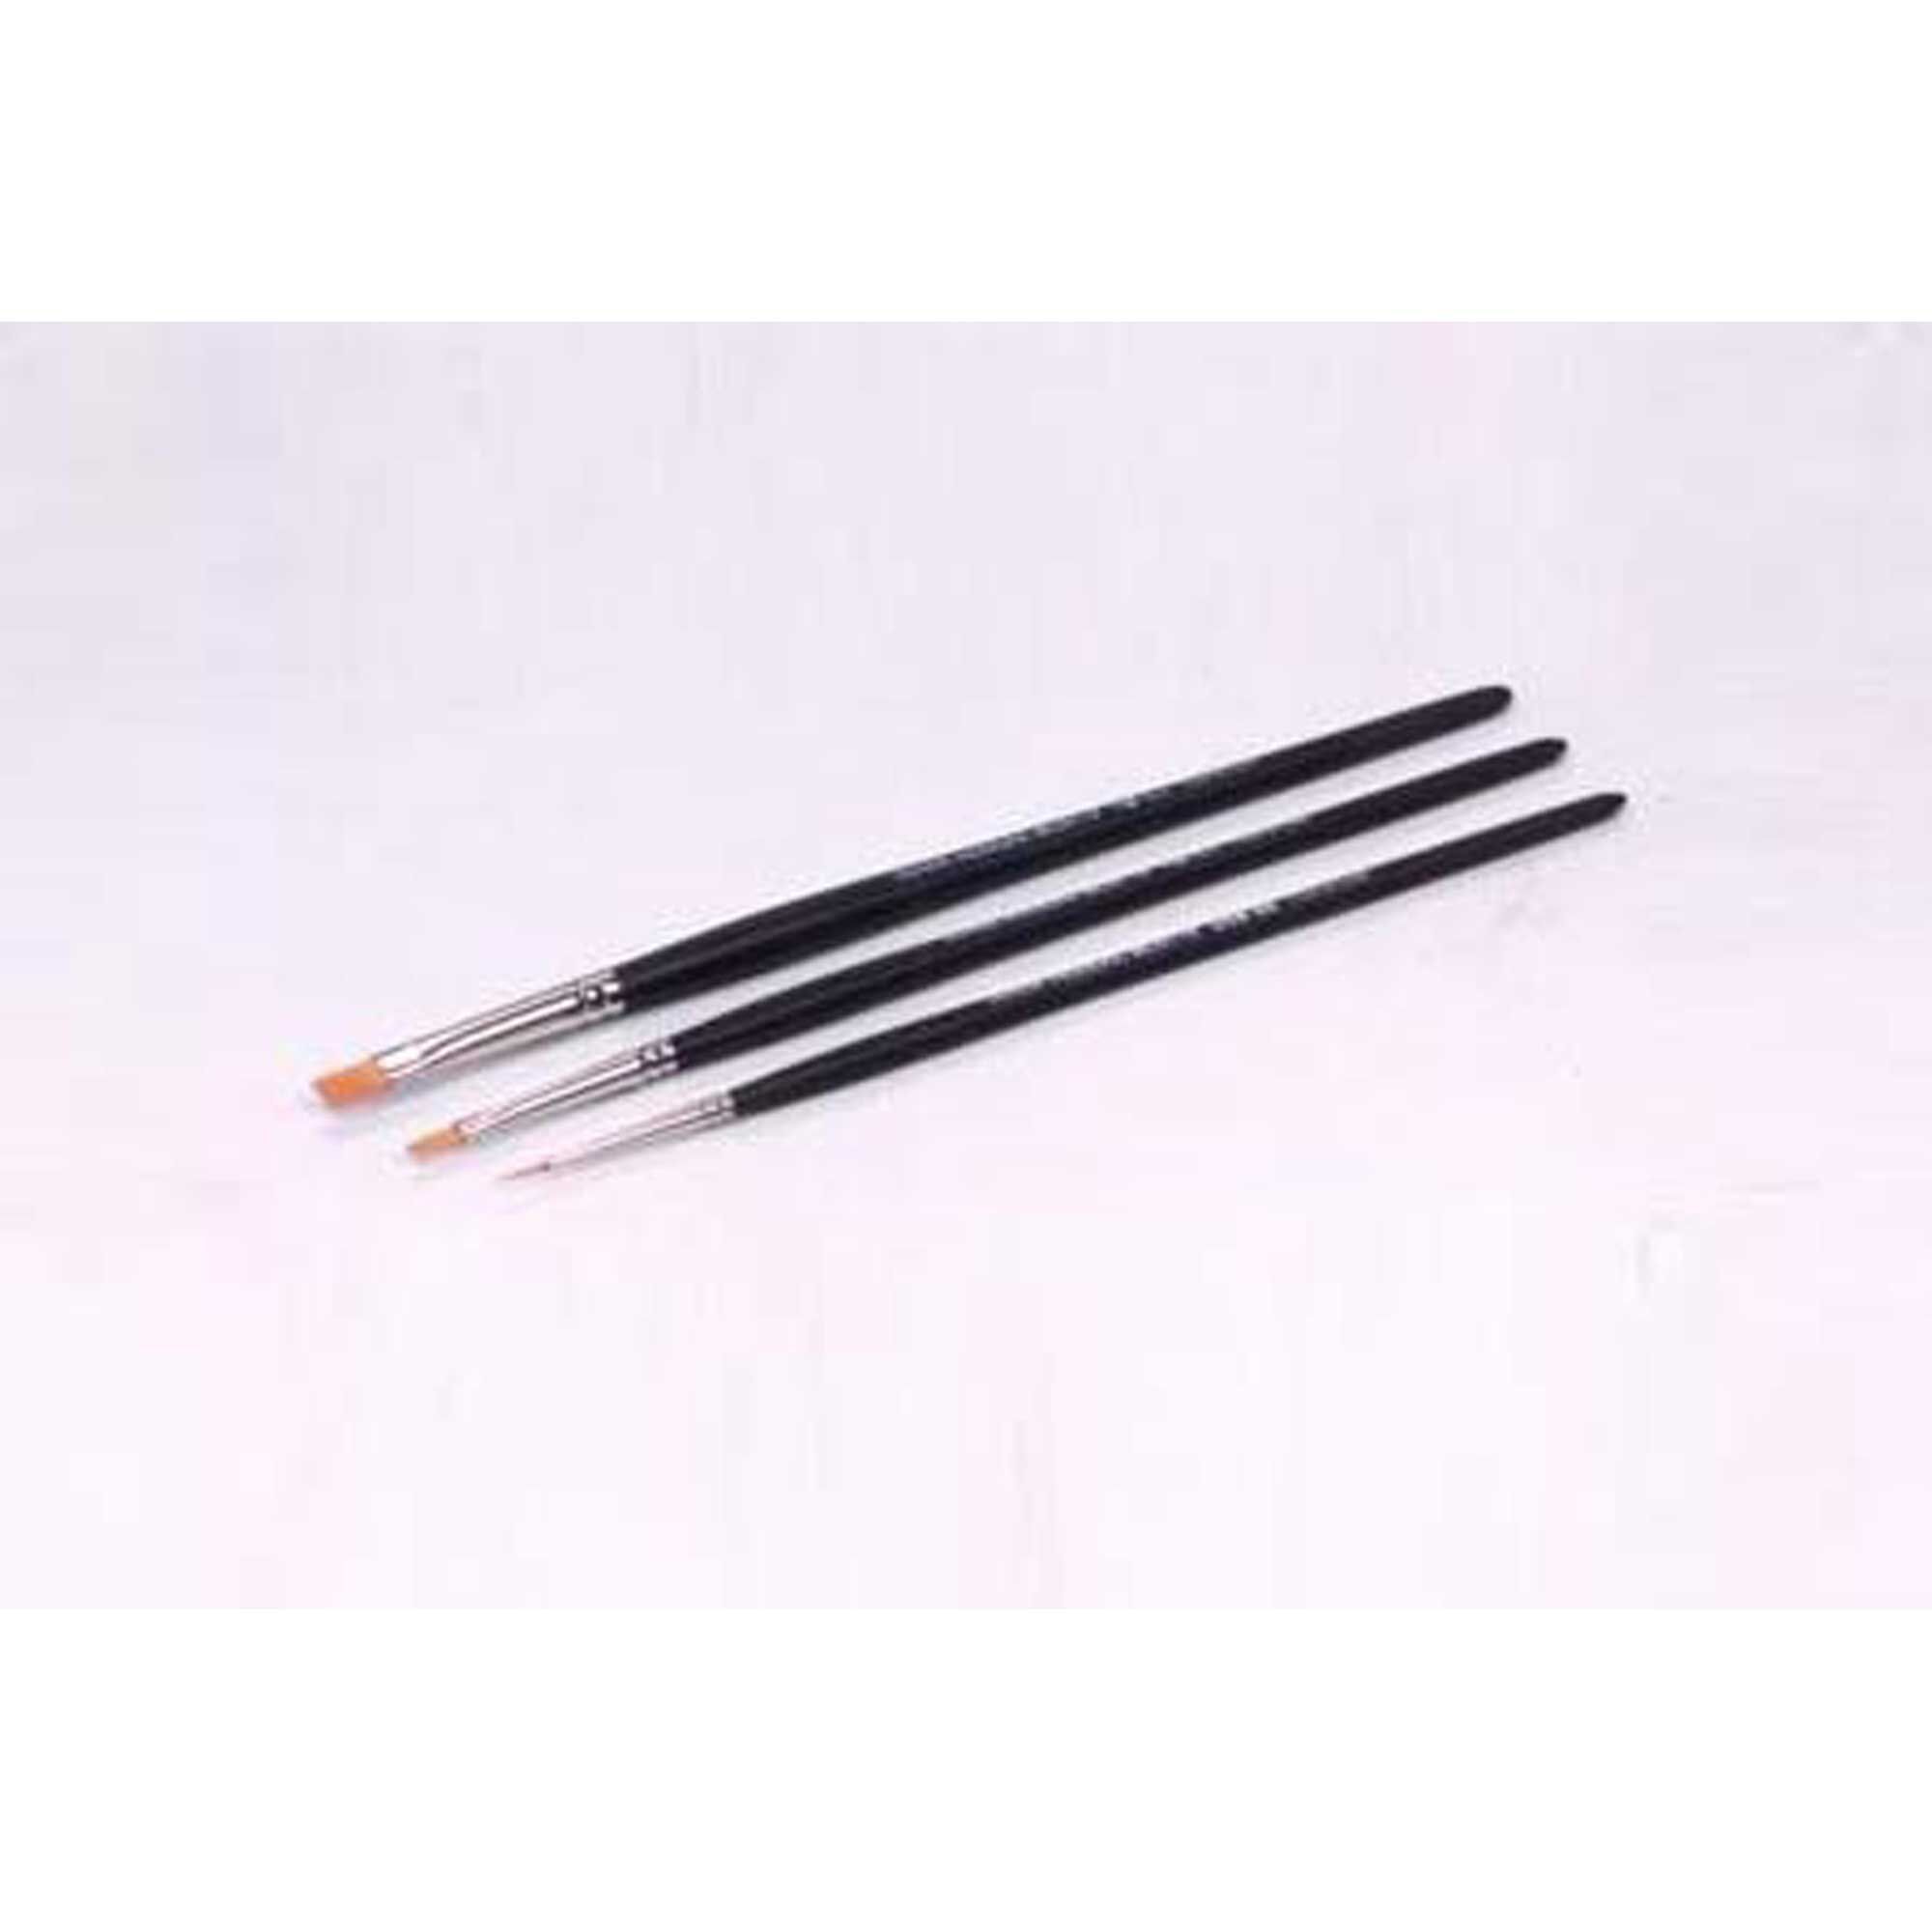 Modelling Brush HF Standard Set Tamiya Free Delivery Paint Brushes 